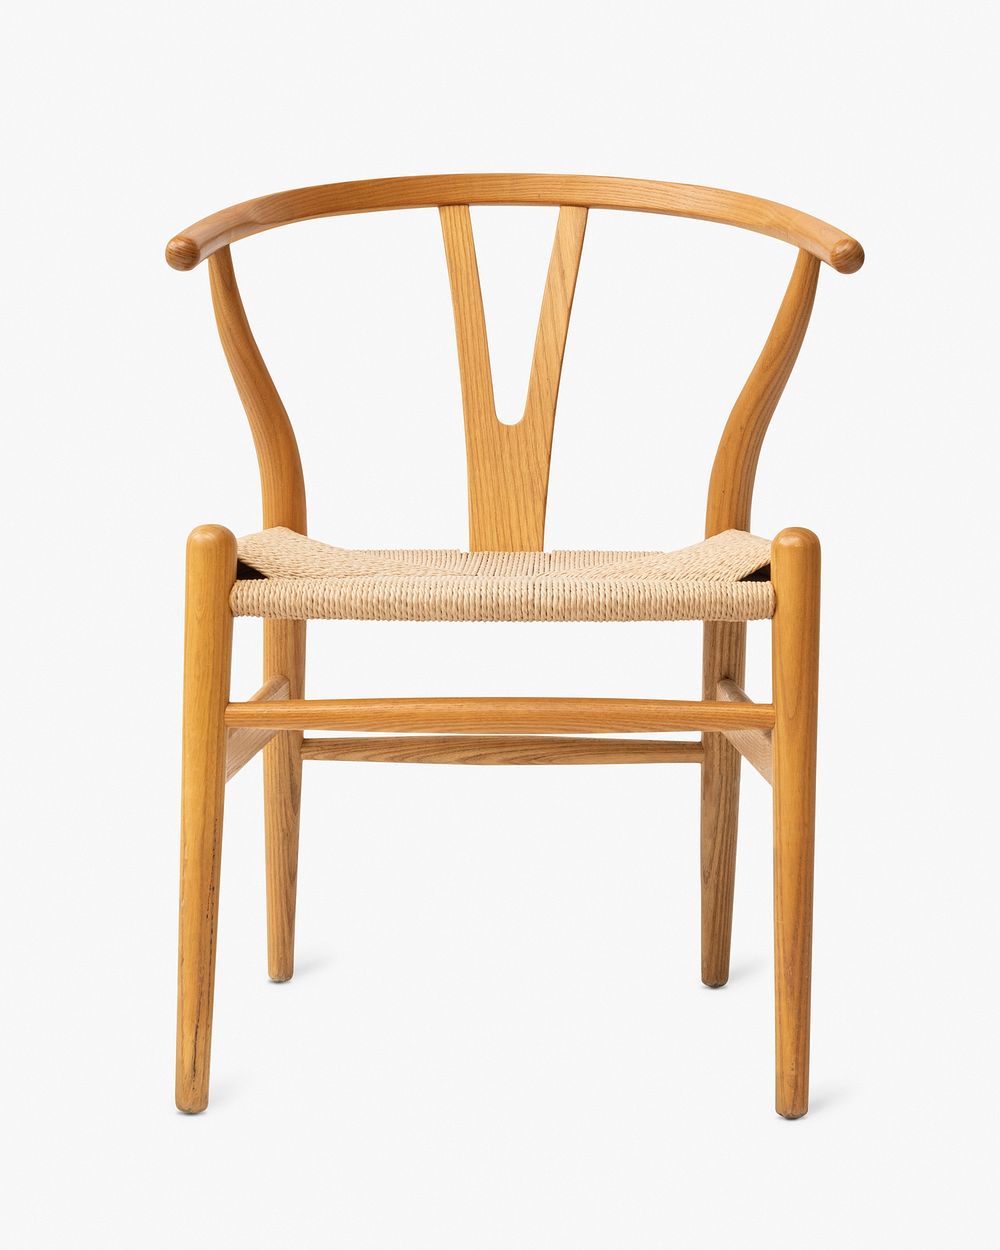 Wishbone chair psd mockup in natural wood